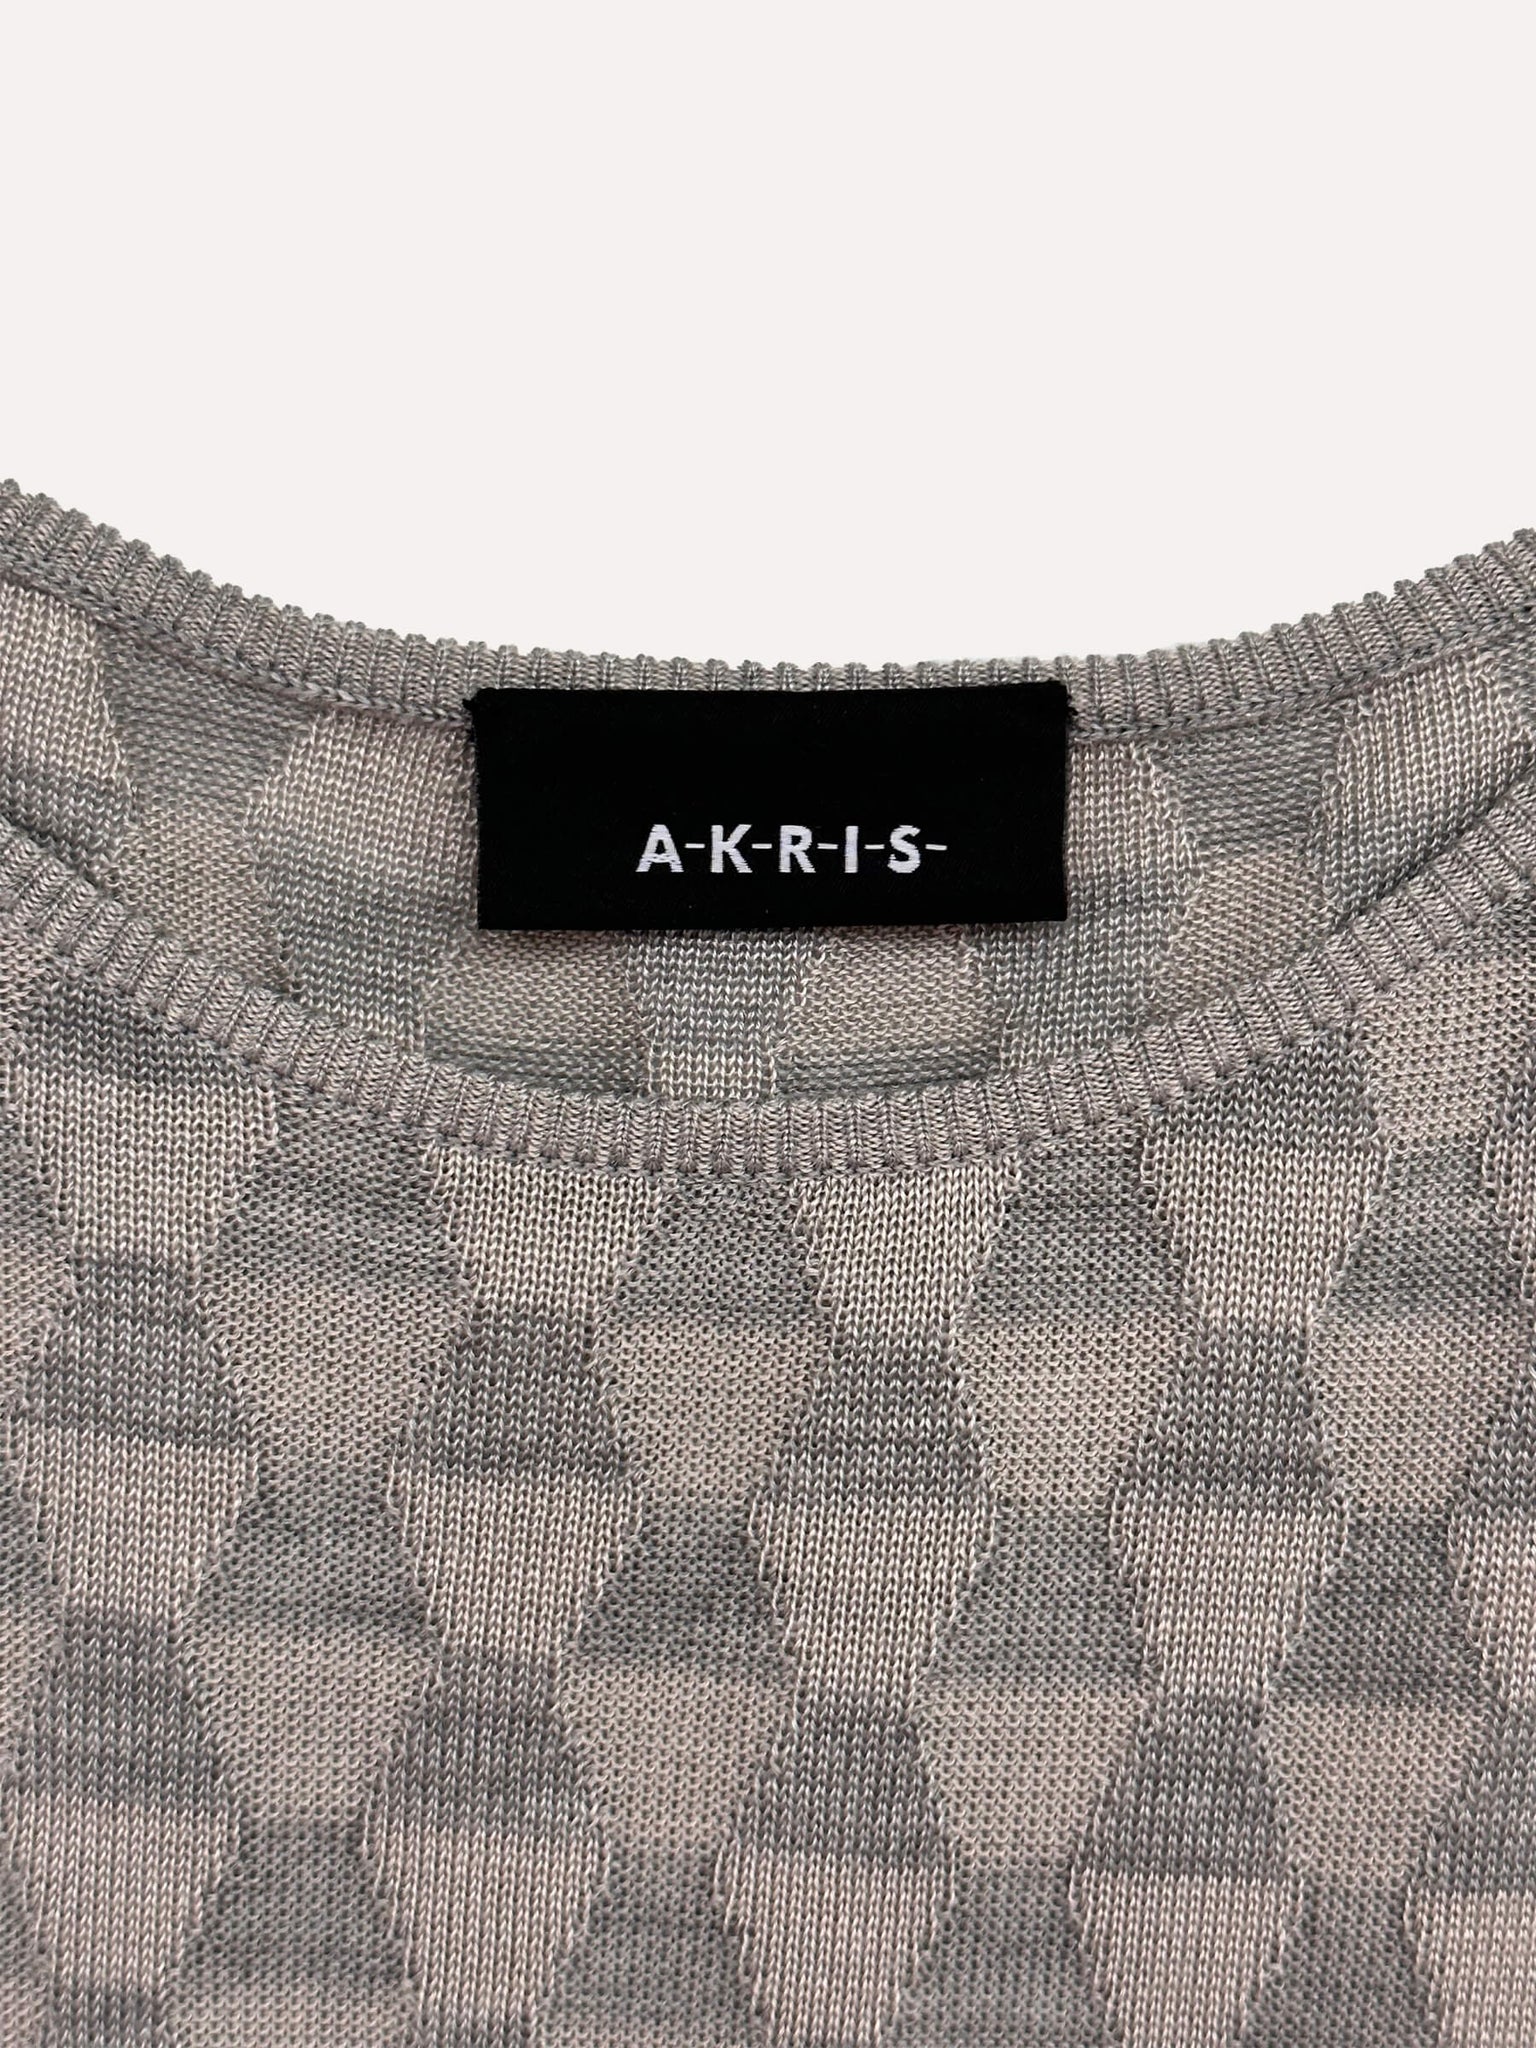 AKRIS Silk Jacquard Knit | M/8